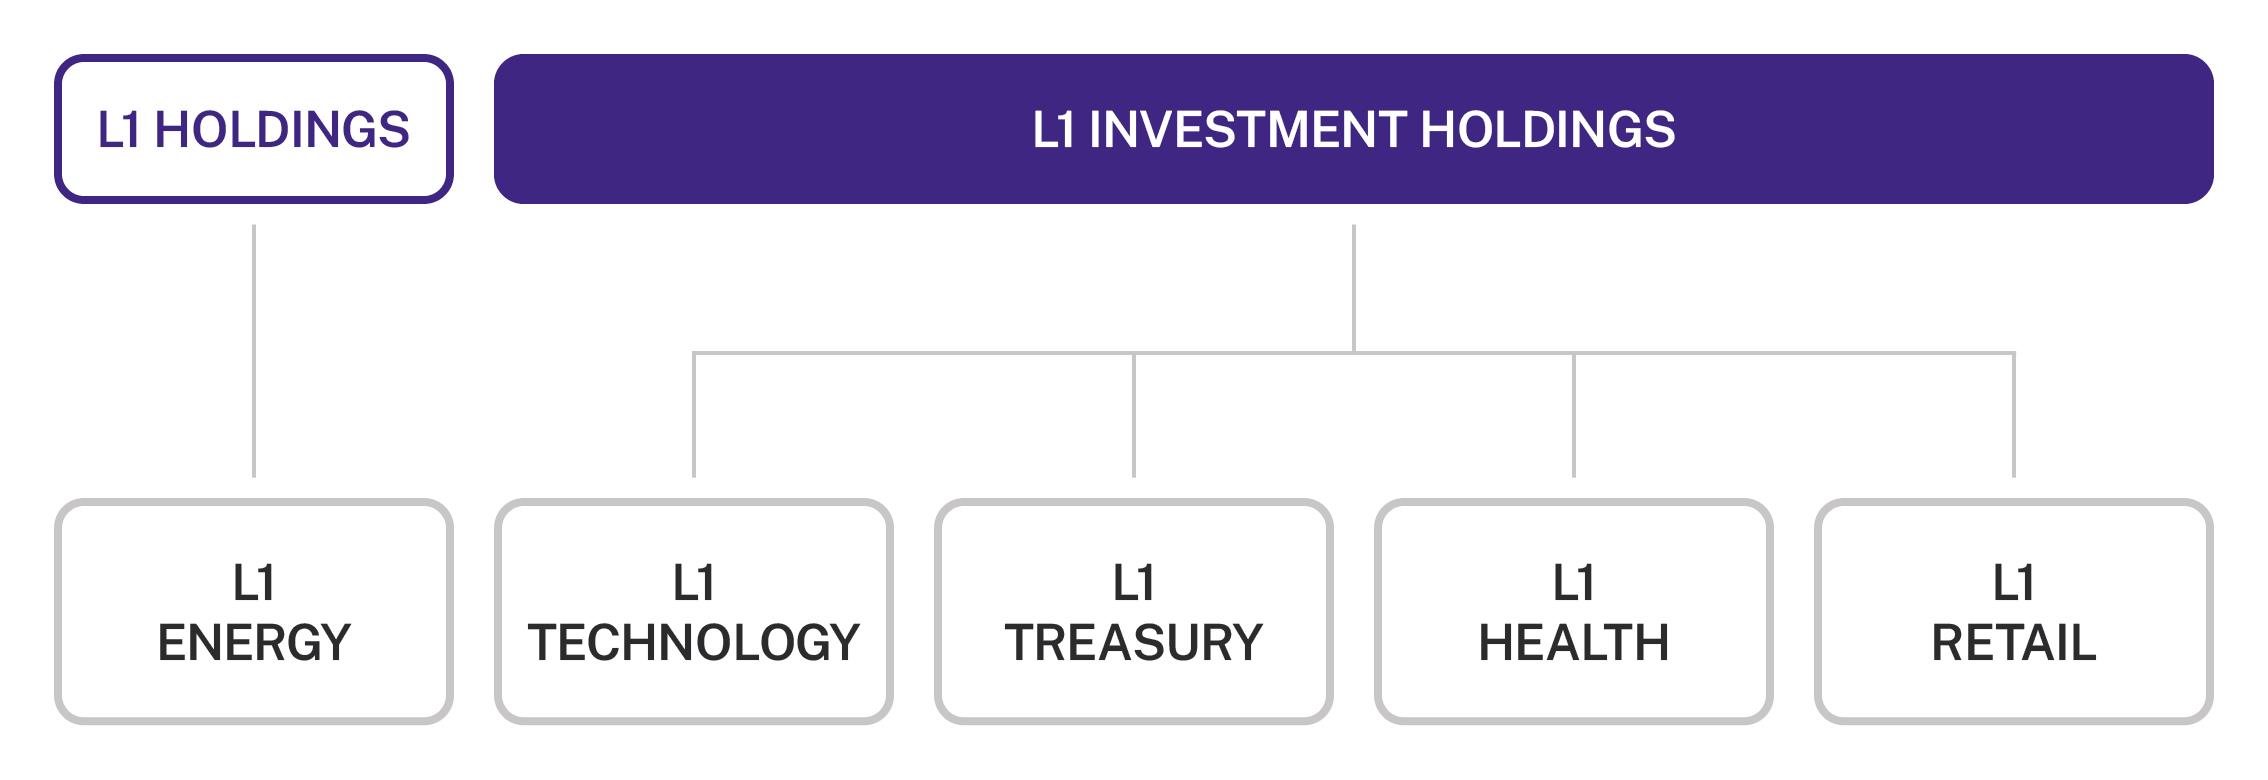 L1 Holdings